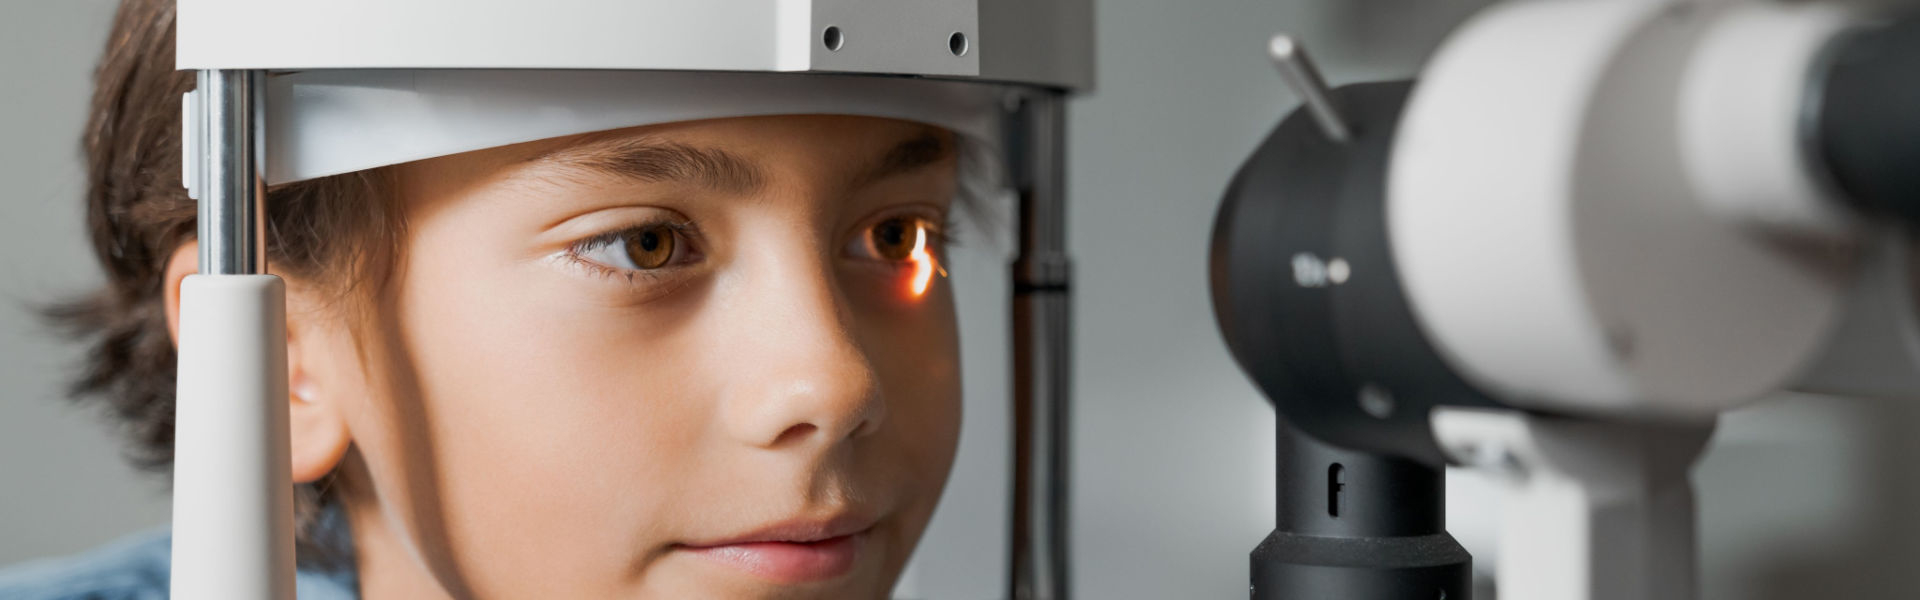 Eye Checkup for Kids - Eyedeology Eyecare Calgary